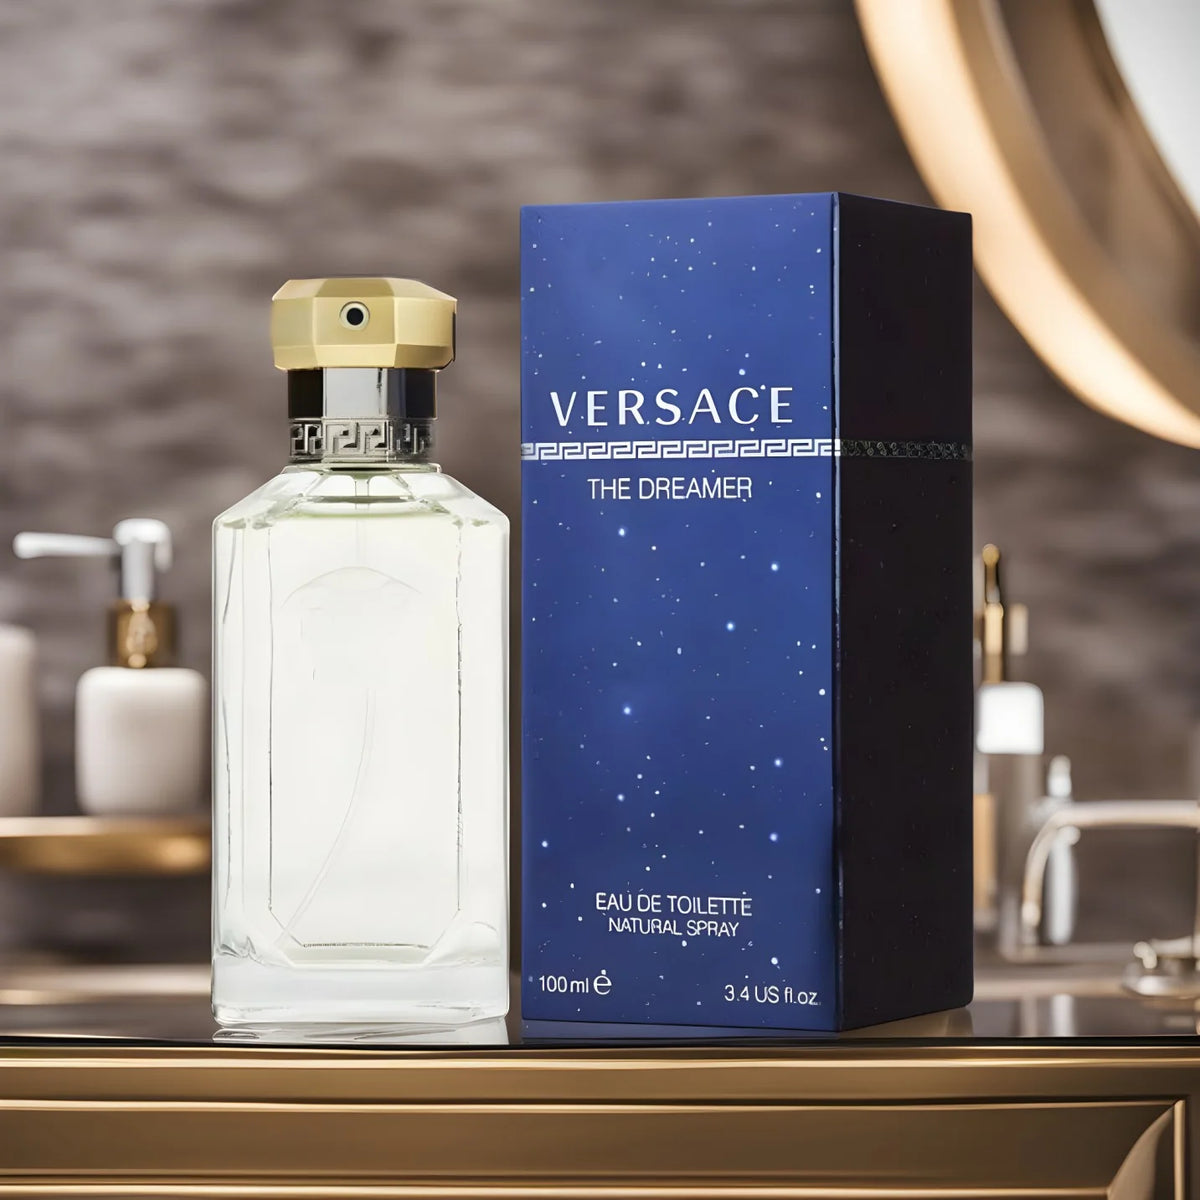 The Dreamer Eau de Toilette Spray for Men by Versace - Perfumora